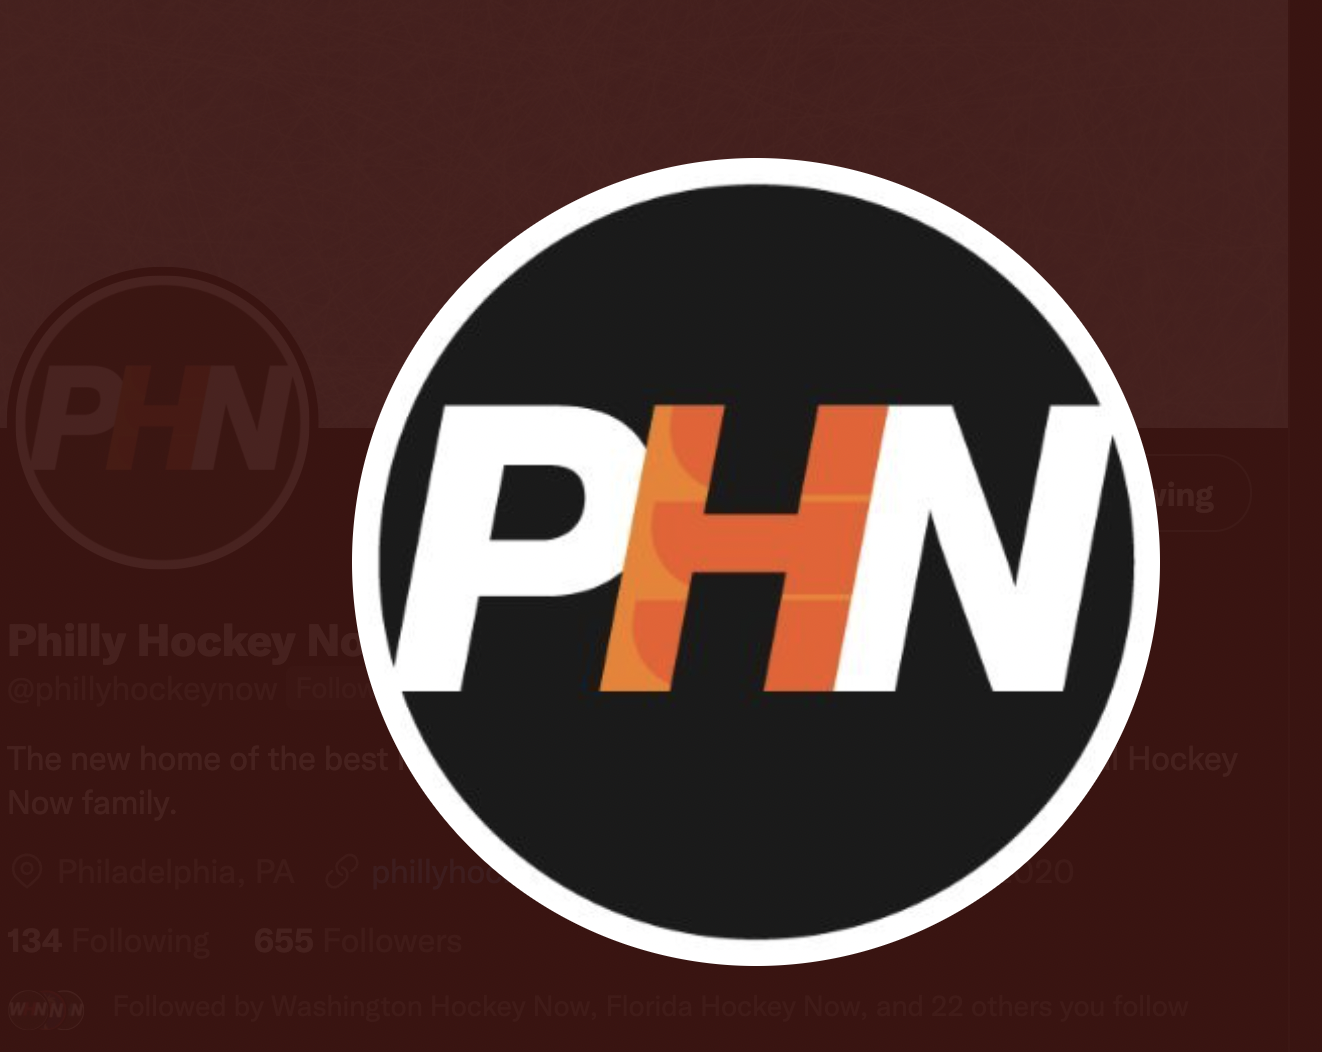 Philadelphia Flyers, Philly Hockey Now